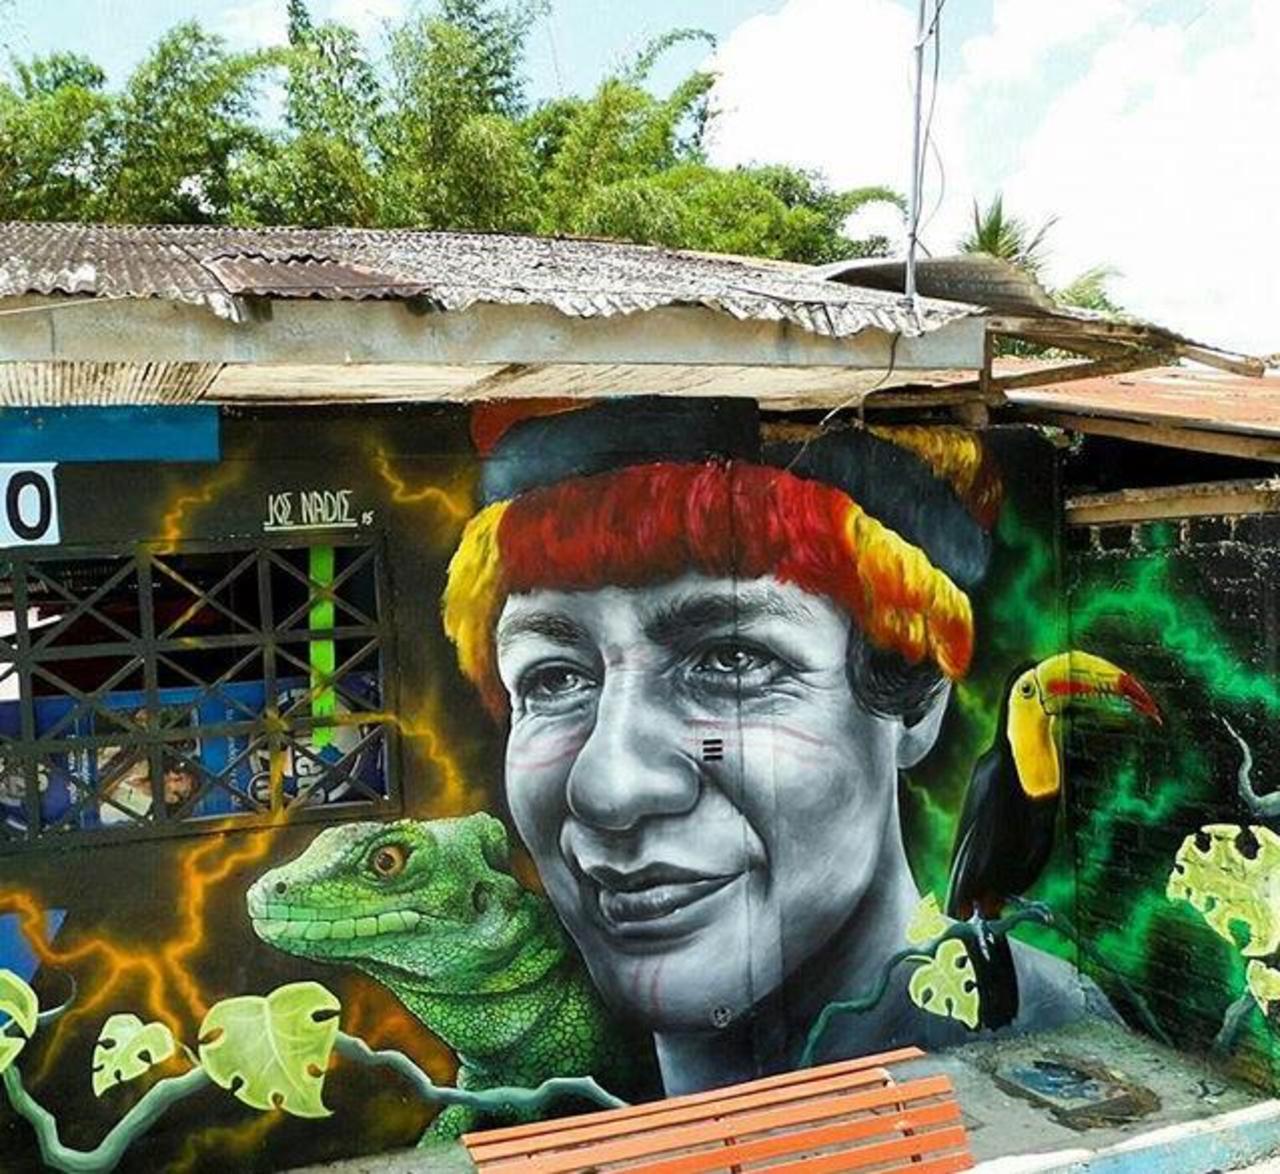 I love this: Street Art by Joe Nadie

#art #mural #graffiti #streetart http://t.co/R81GC2nms6 MT @GoogleStreetArt